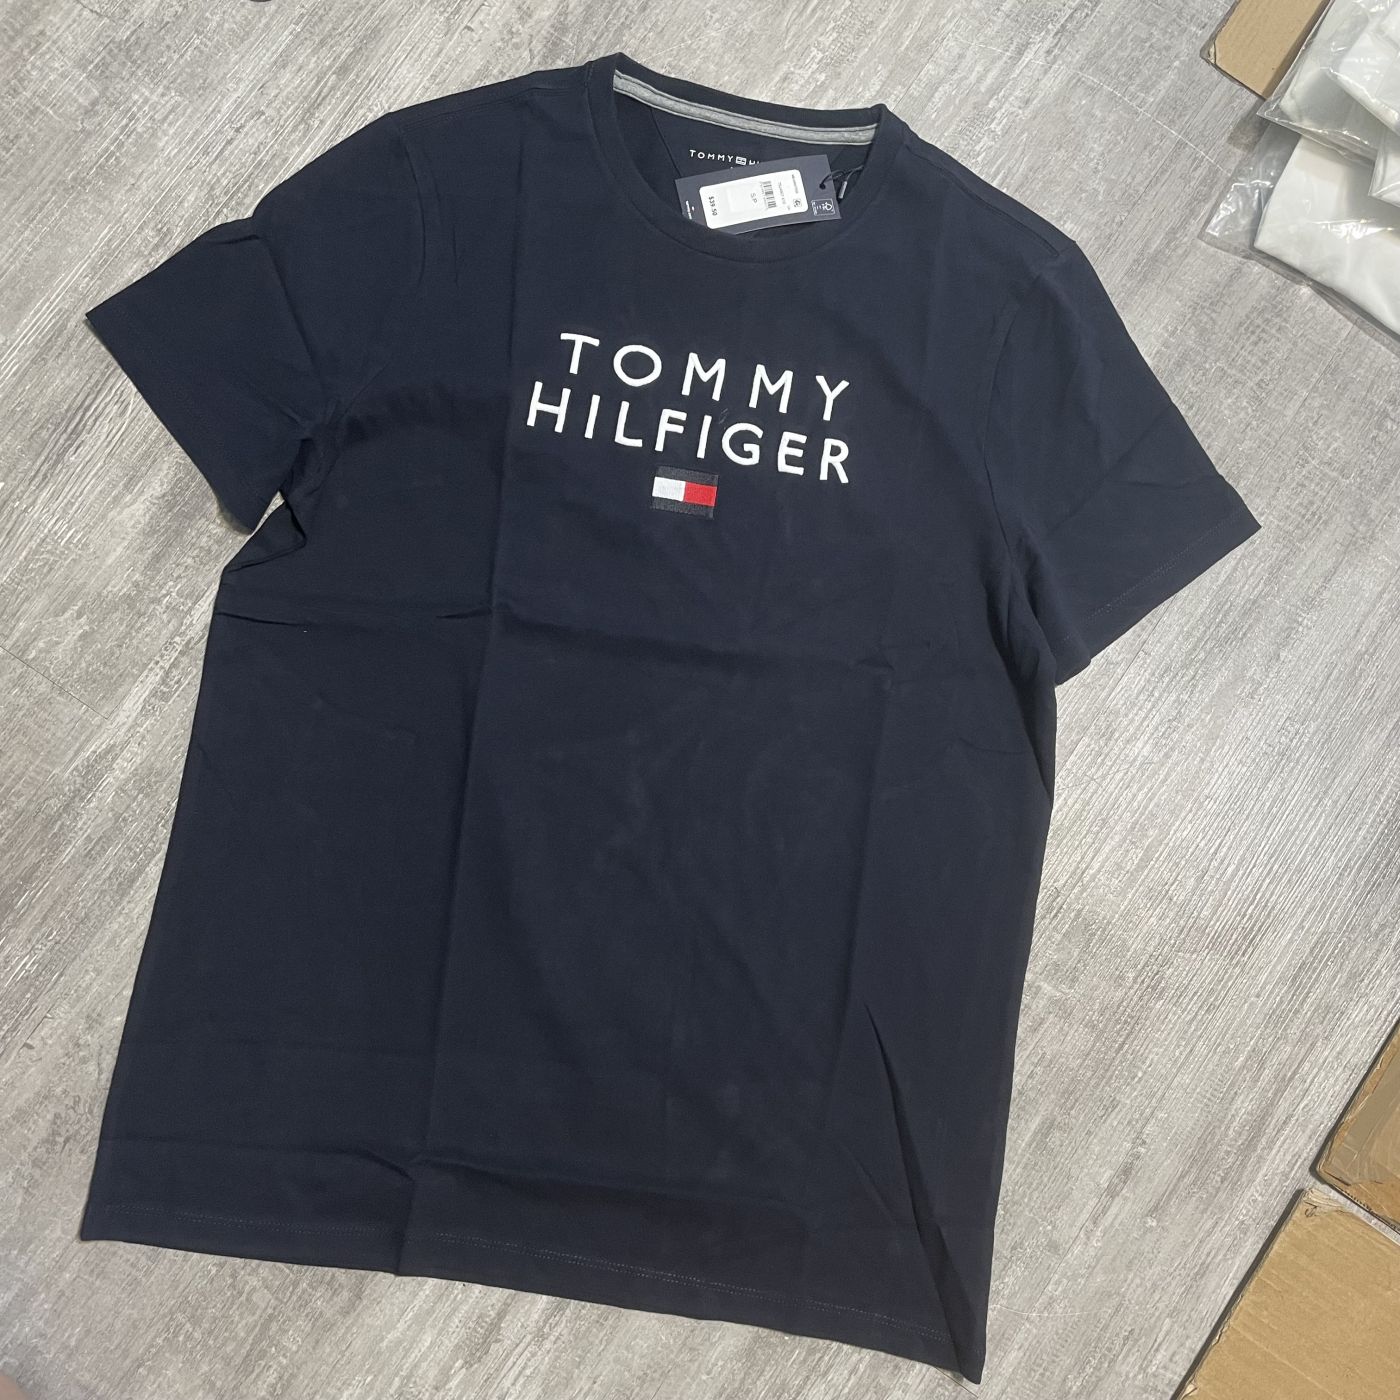 Tommy hilfiget t shirt